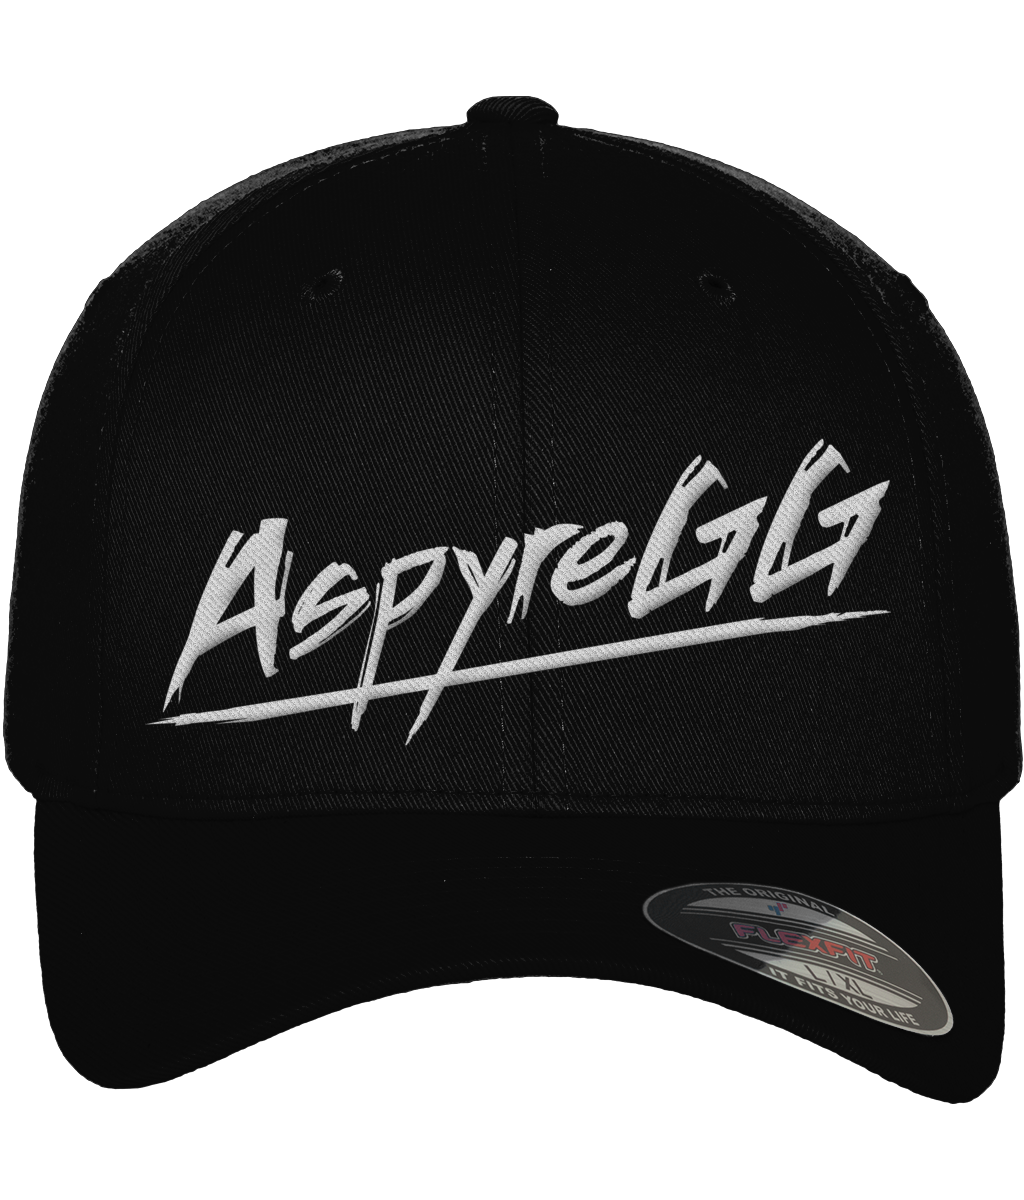 AspyreGG Premium Fitted Baseball Cap